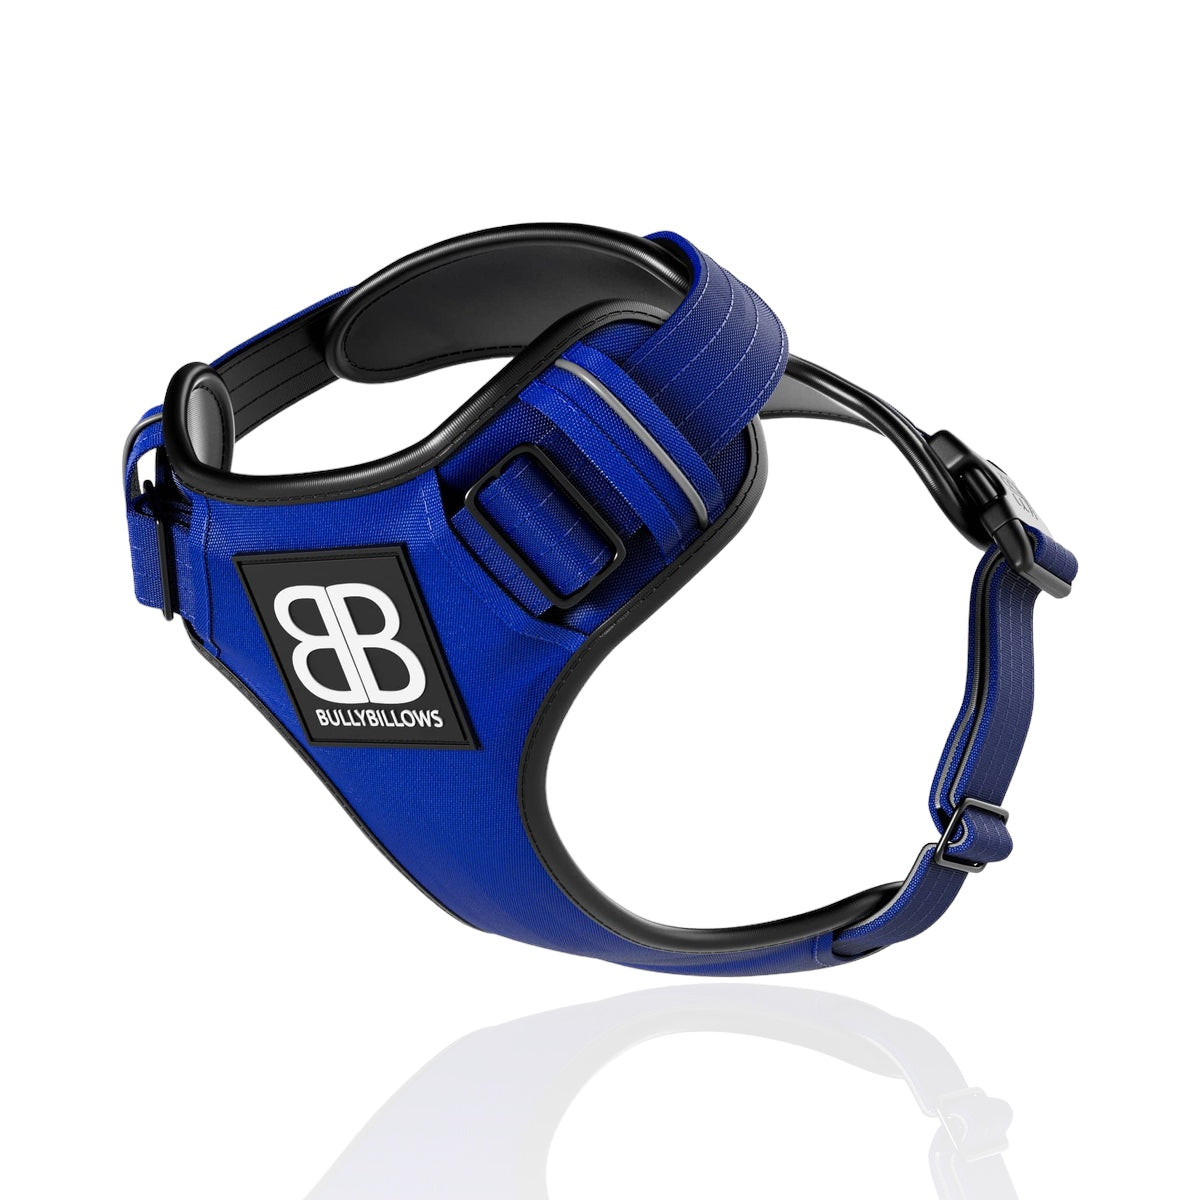 Premium Comfort Harness | Non Restrictive & Adjustable - Blue v2.0